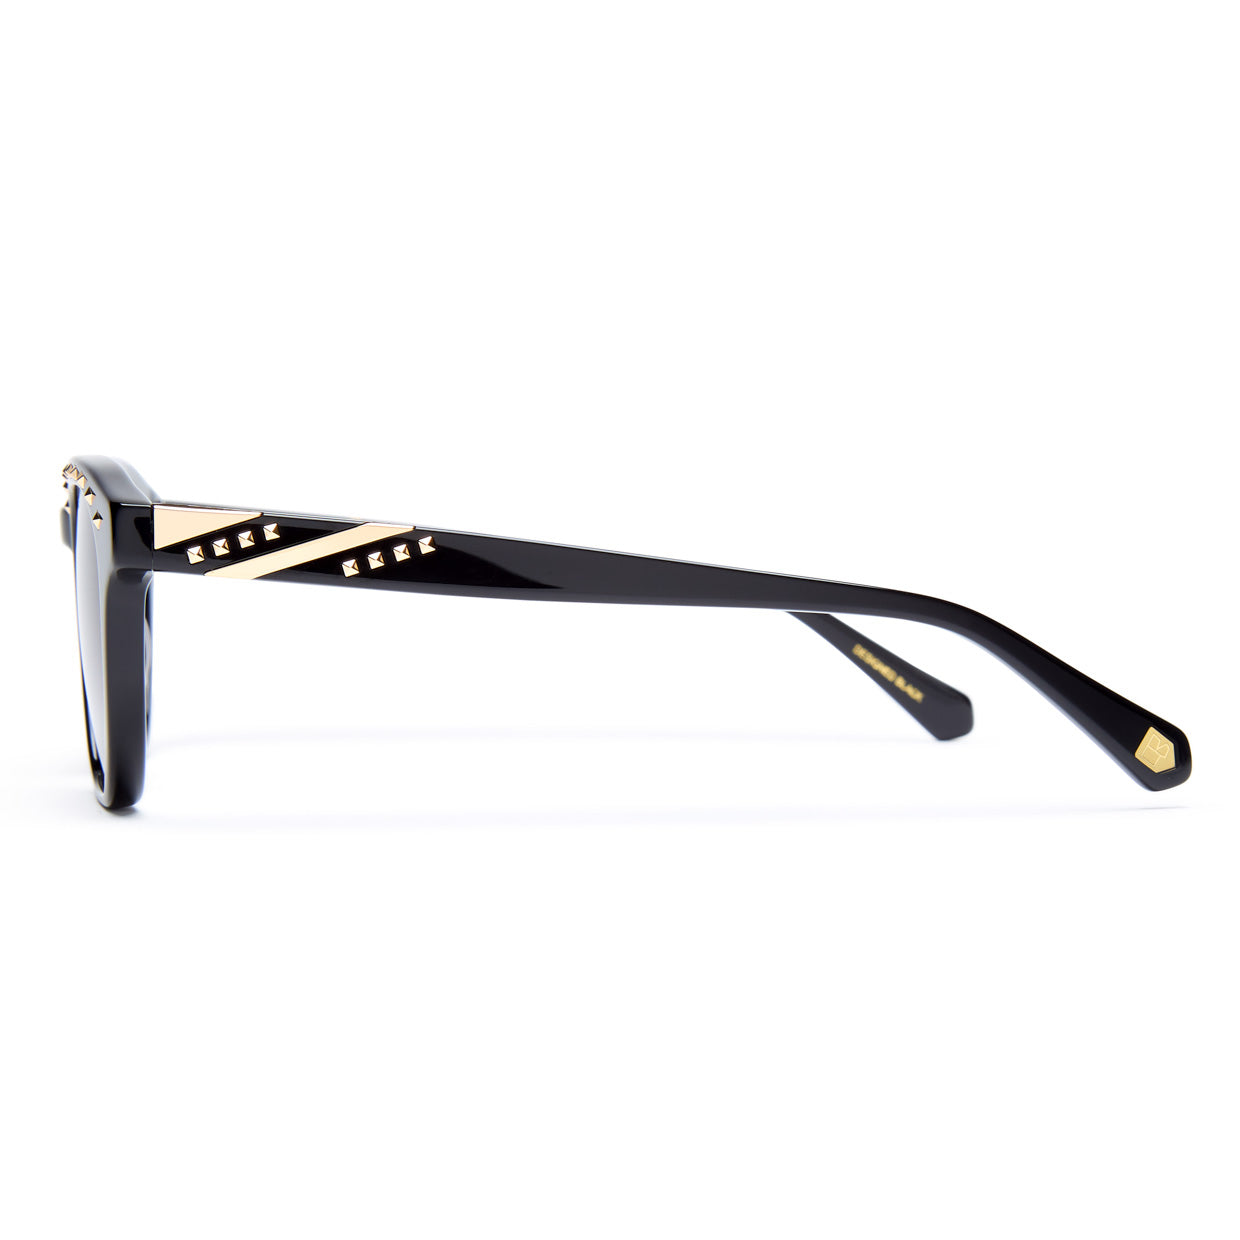 Louis Vuitton Men's Sunglasses for sale in Lubbock, Texas